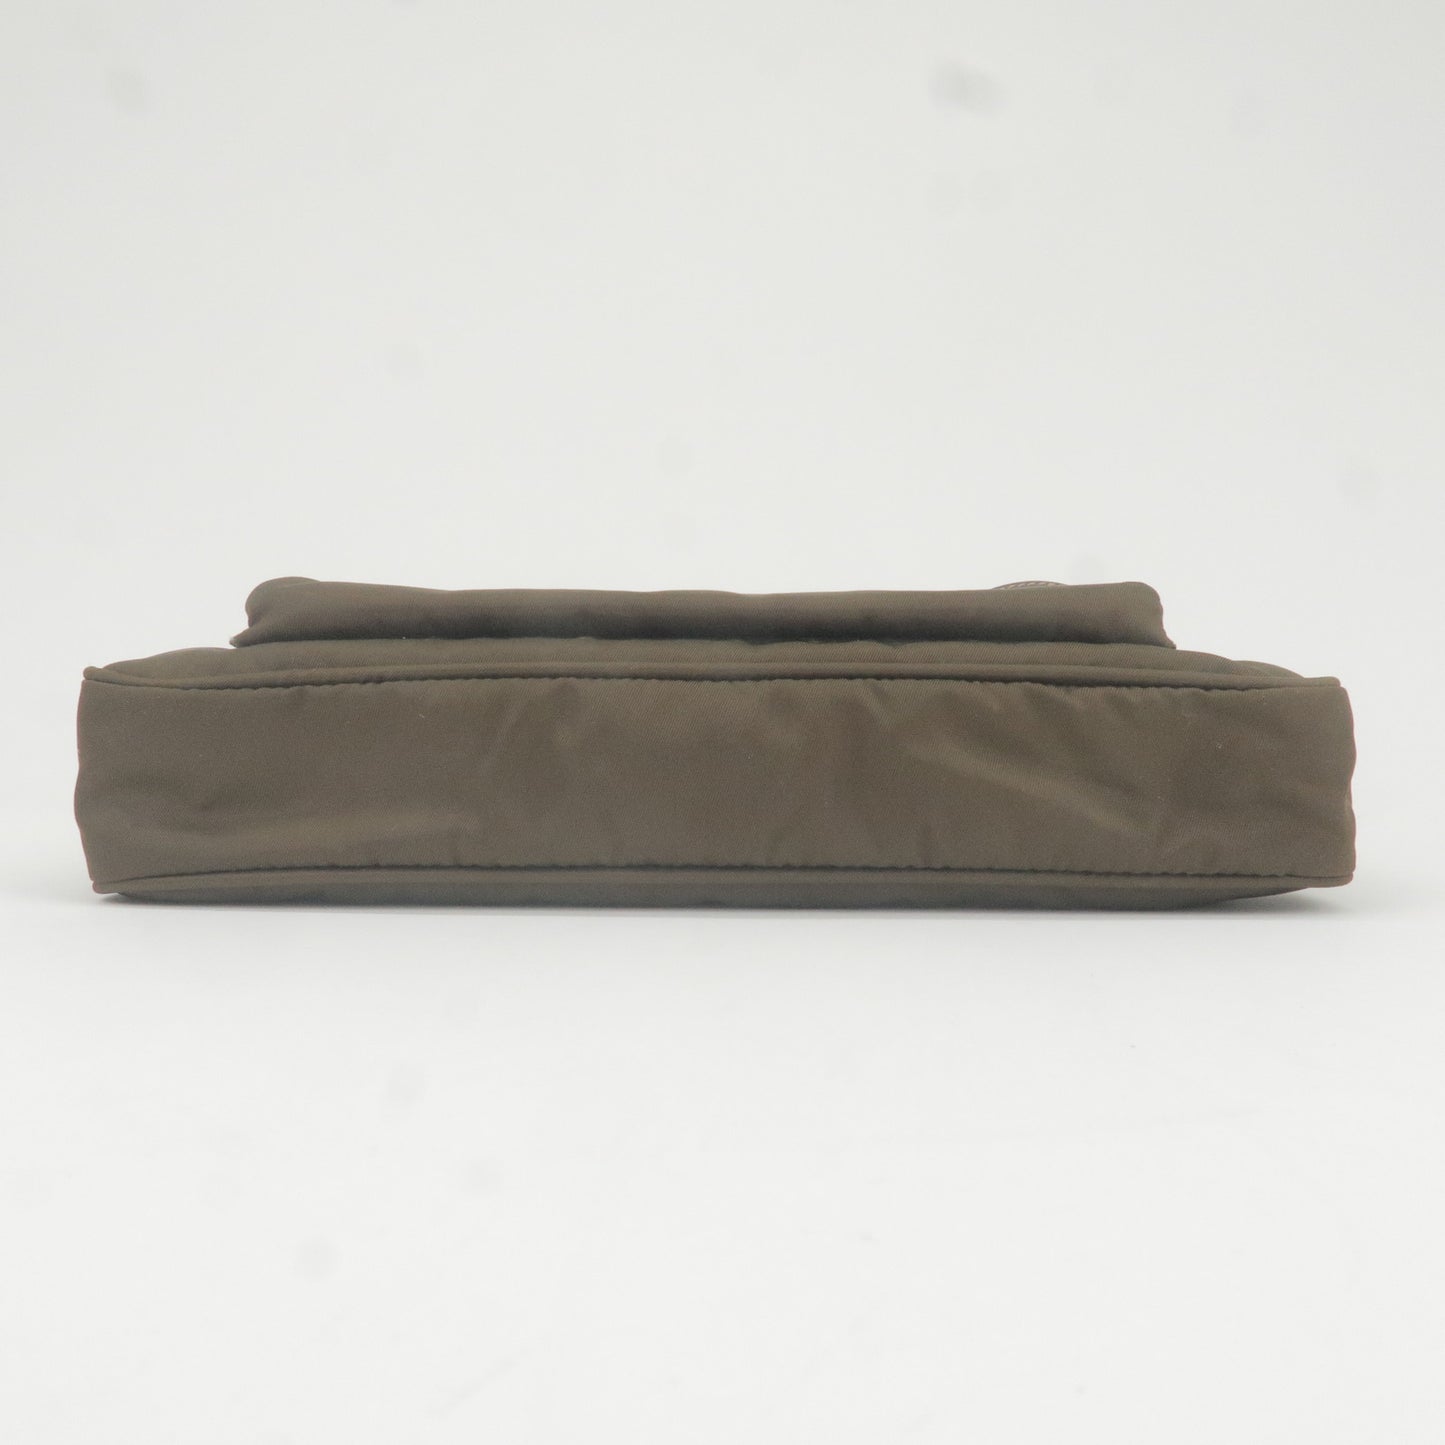 PRADA Logo Nylon Leather Shoulder Bag Purse Khaki BT0693